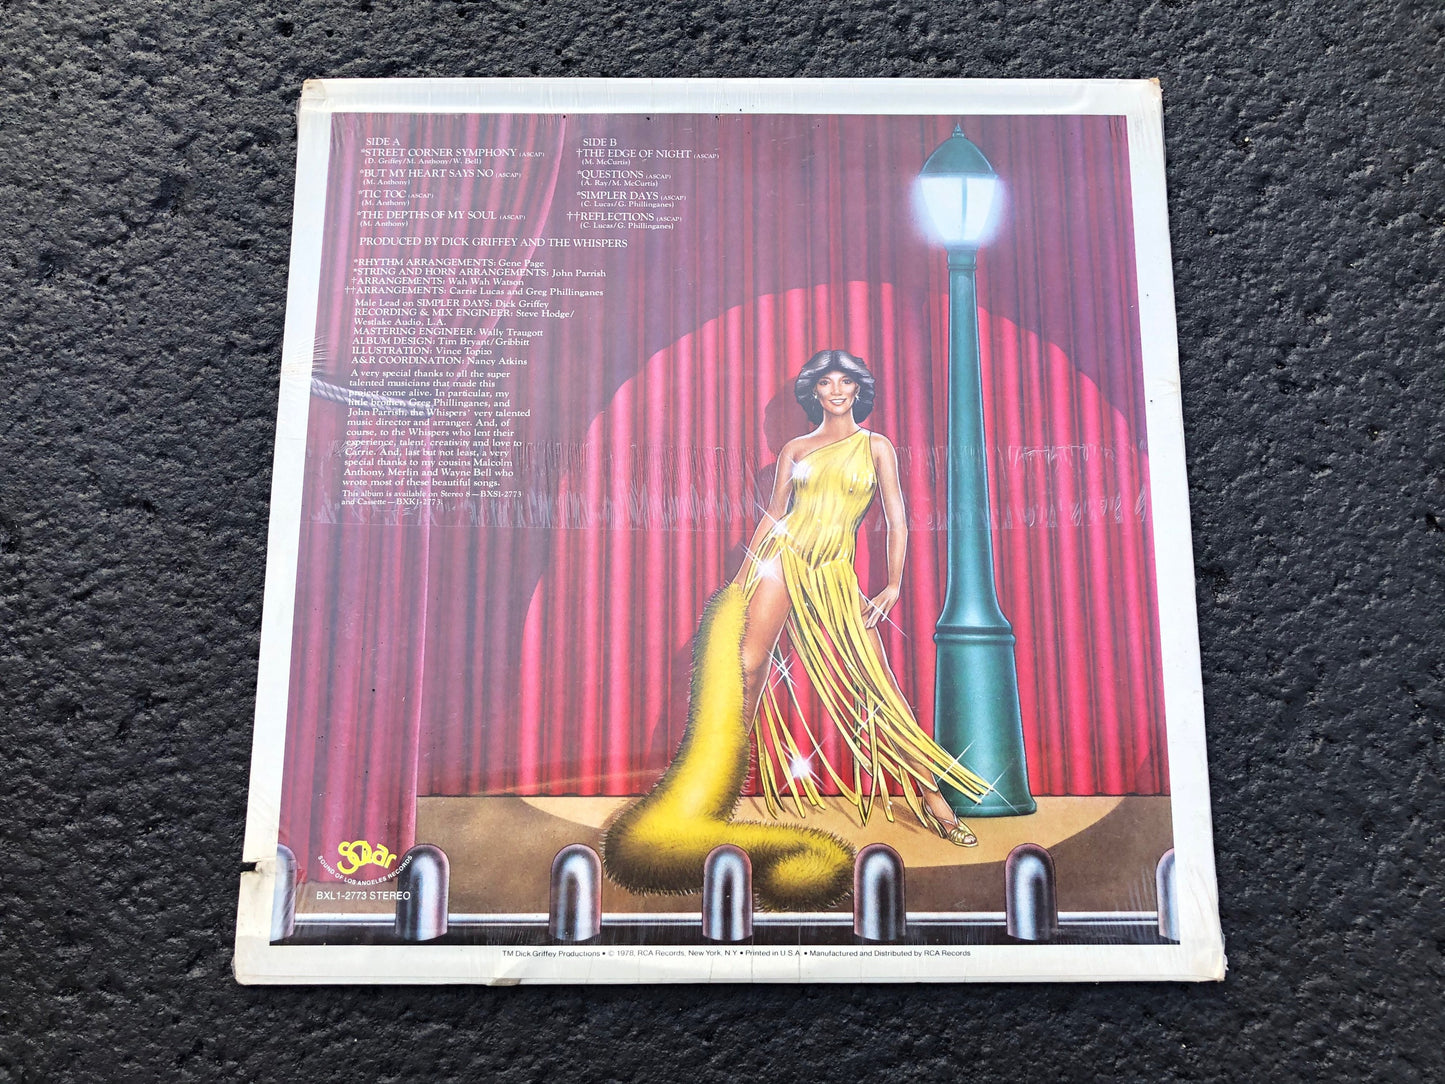 Carrie Lucas | Street Corner Symphony  | 1978 Soul Disco  | SEALED In shrink | Vintage Vinyl Records | Soul records